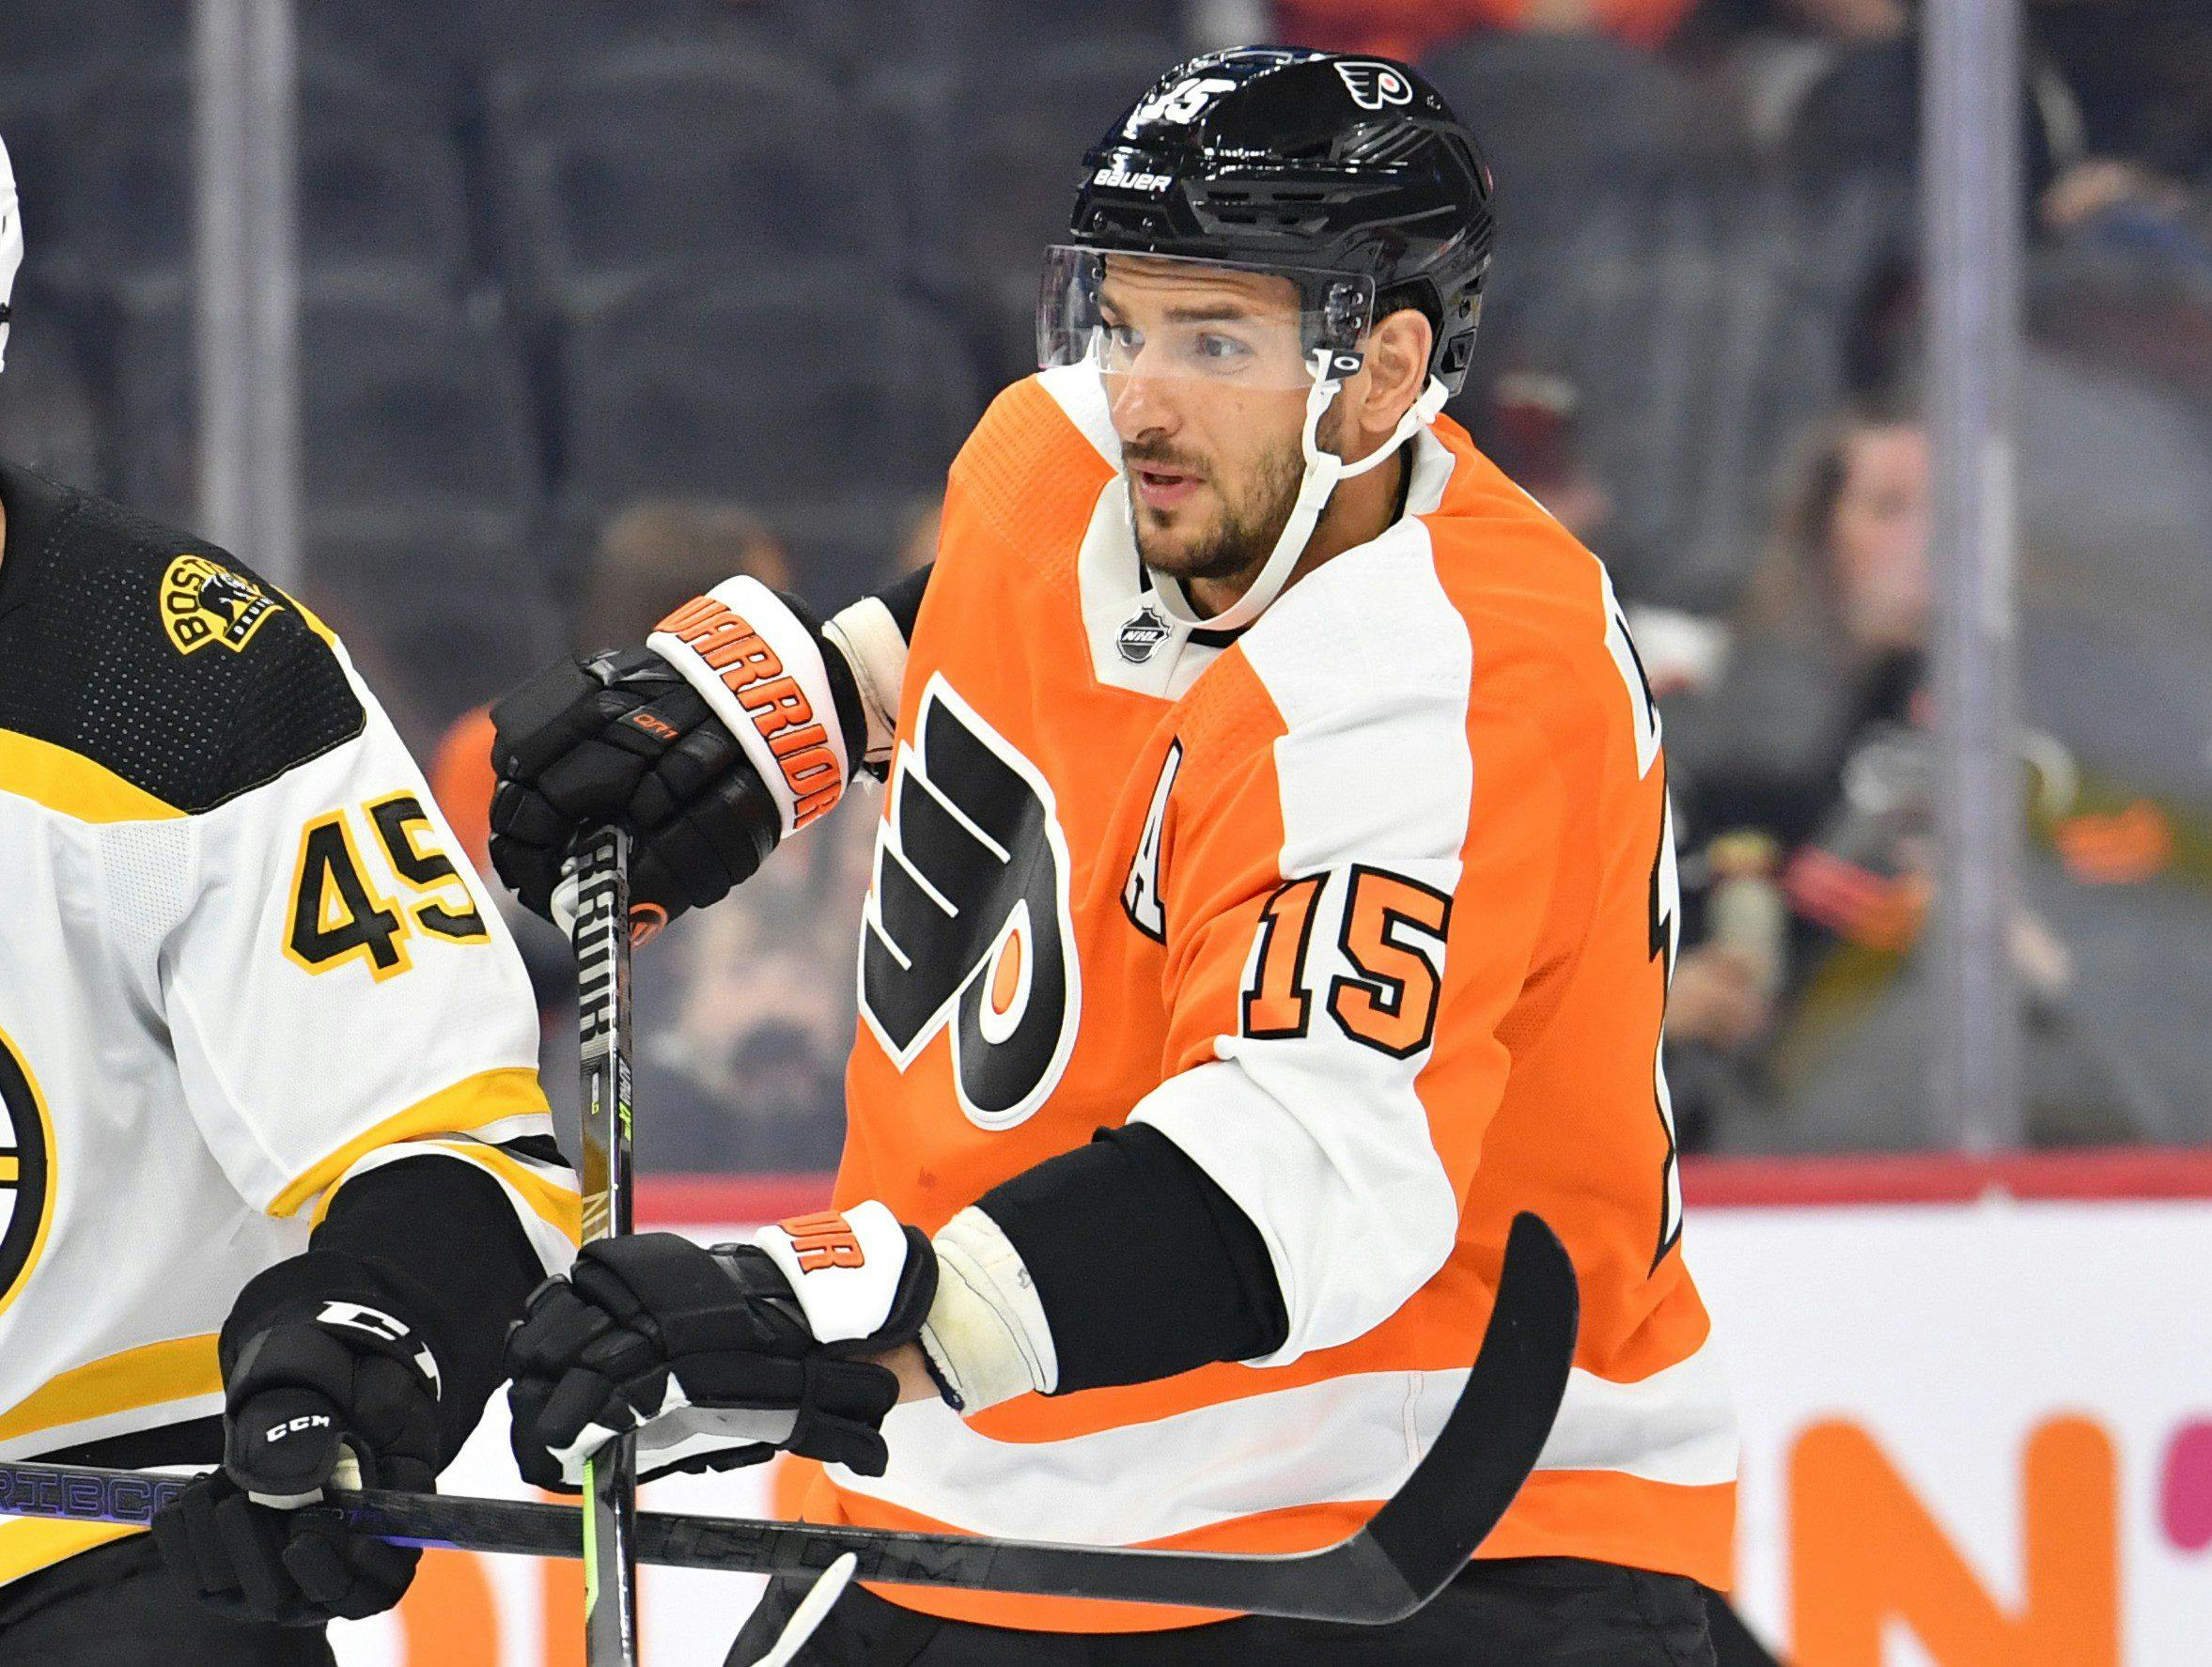 Artem Anisimov has had a positive impact with the Philadelphia Flyers organization